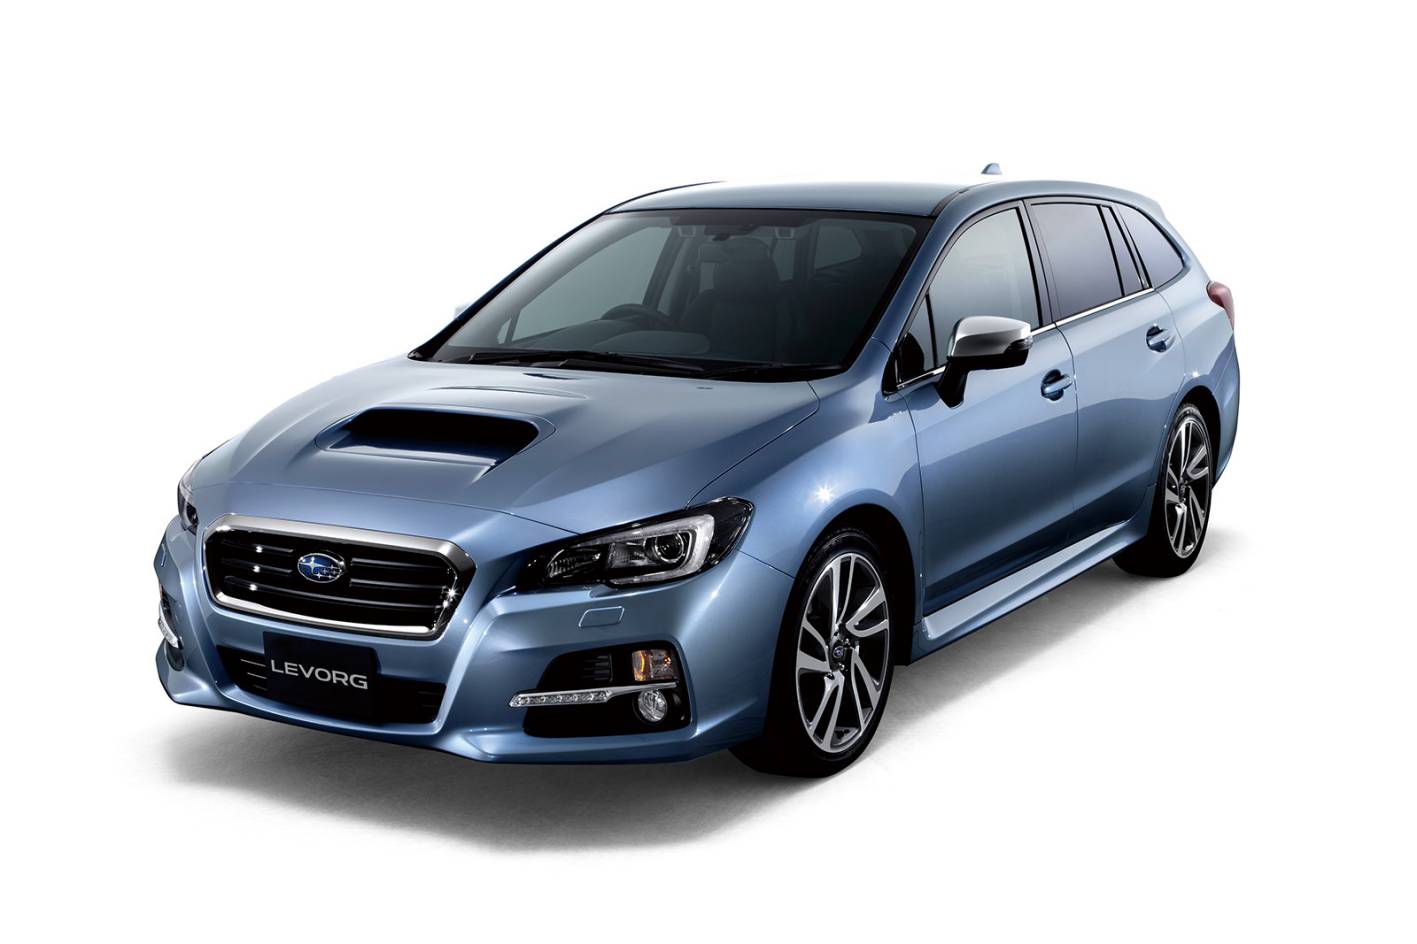 Subaru Levorg unveiled at Tokyo Motor Show